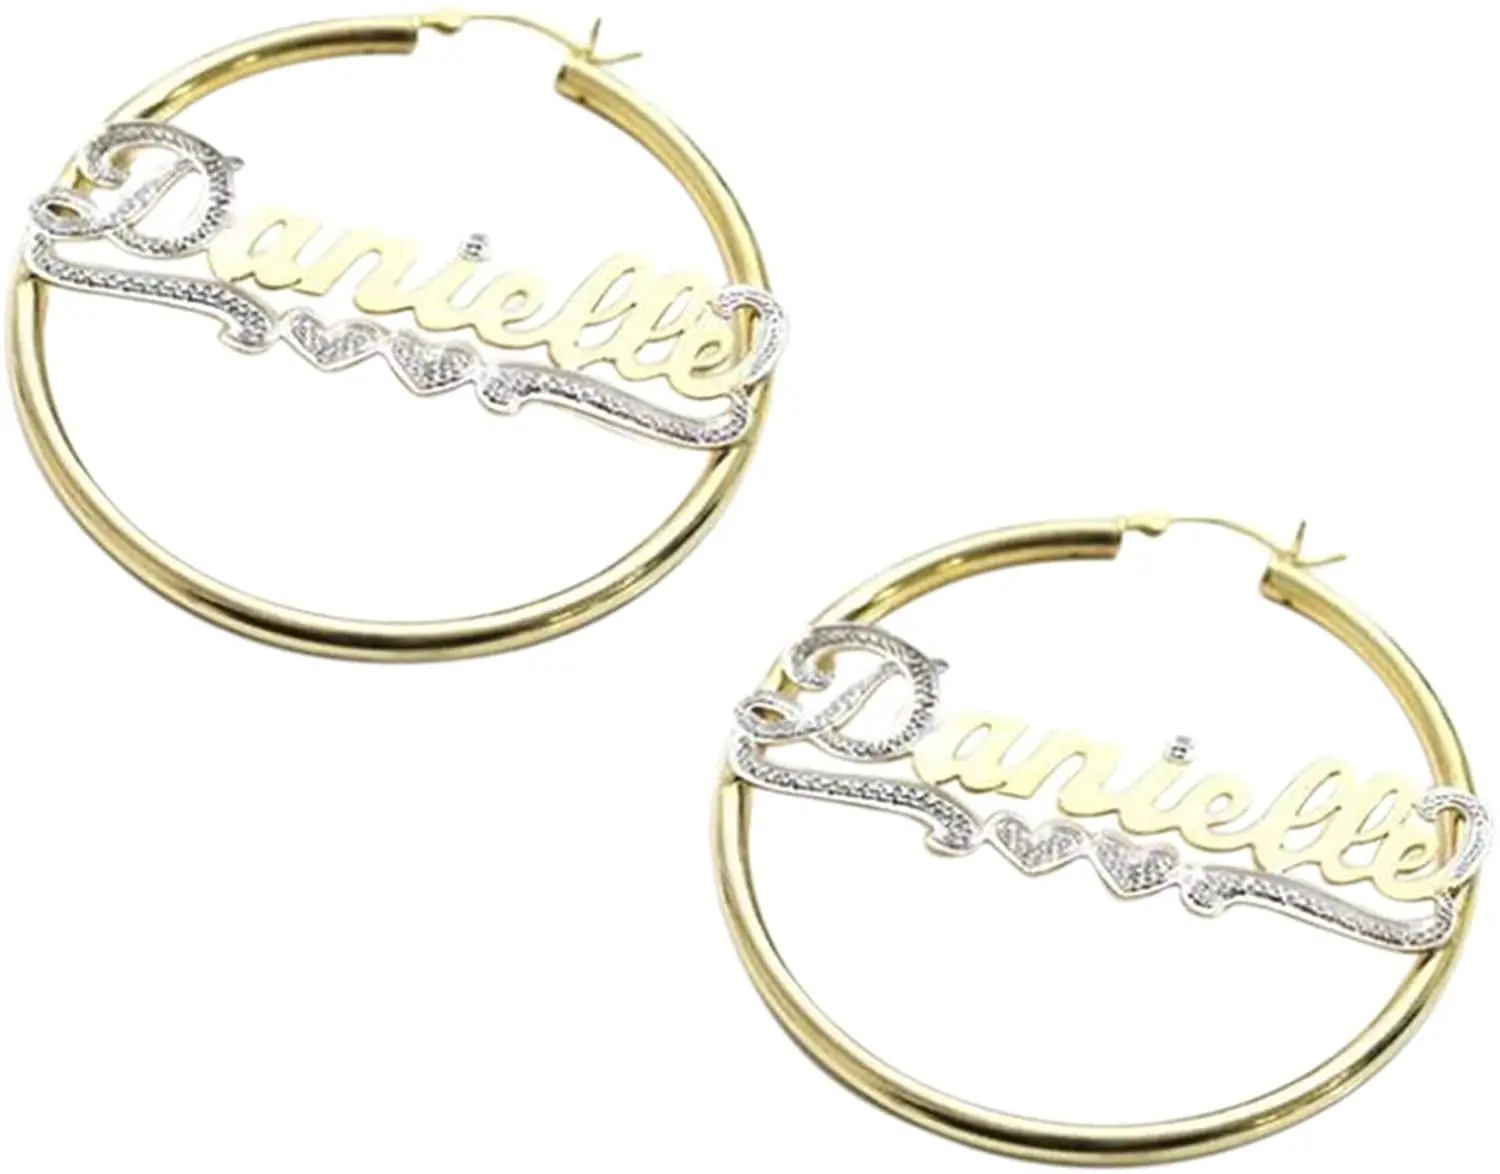 Personalized Hoop Earrings Custom Name Hoop Earrings Custom Earrings Name Hoop 18K Gold Hoop Earrings Personalized Gift for her